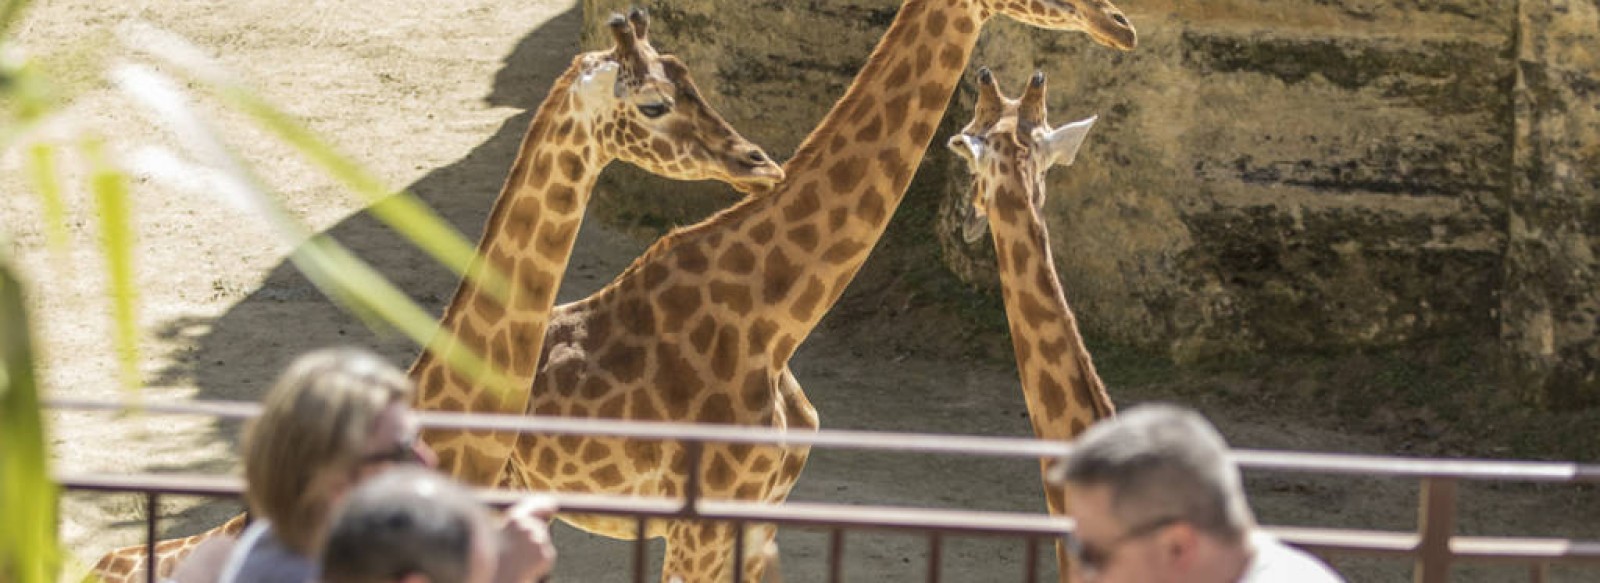 Le camp des girafes